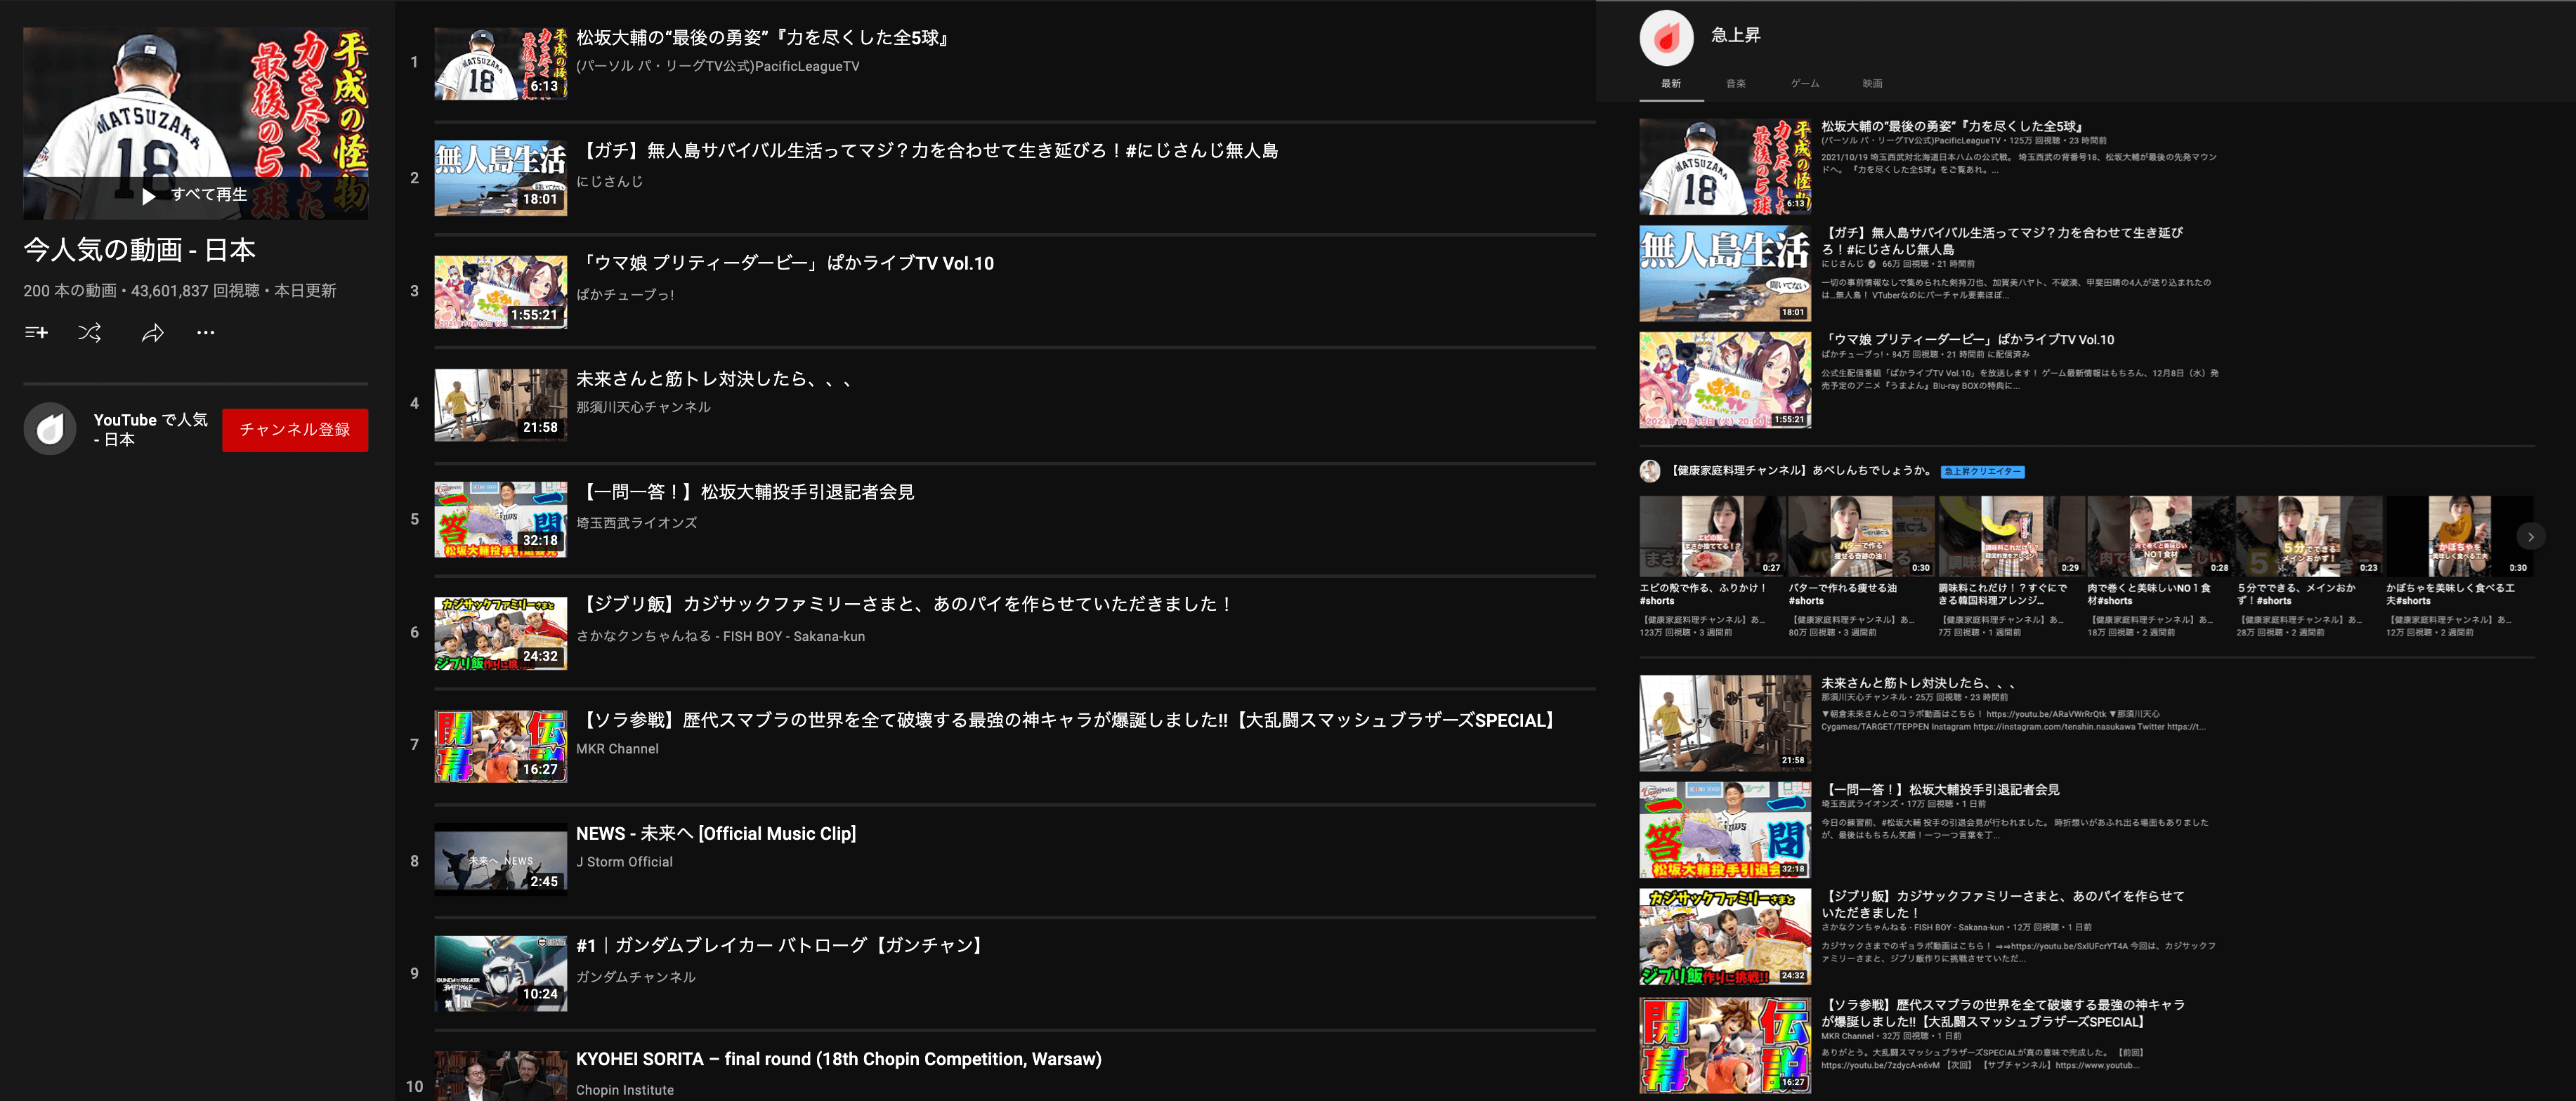 youtube-soaring video-in Japan